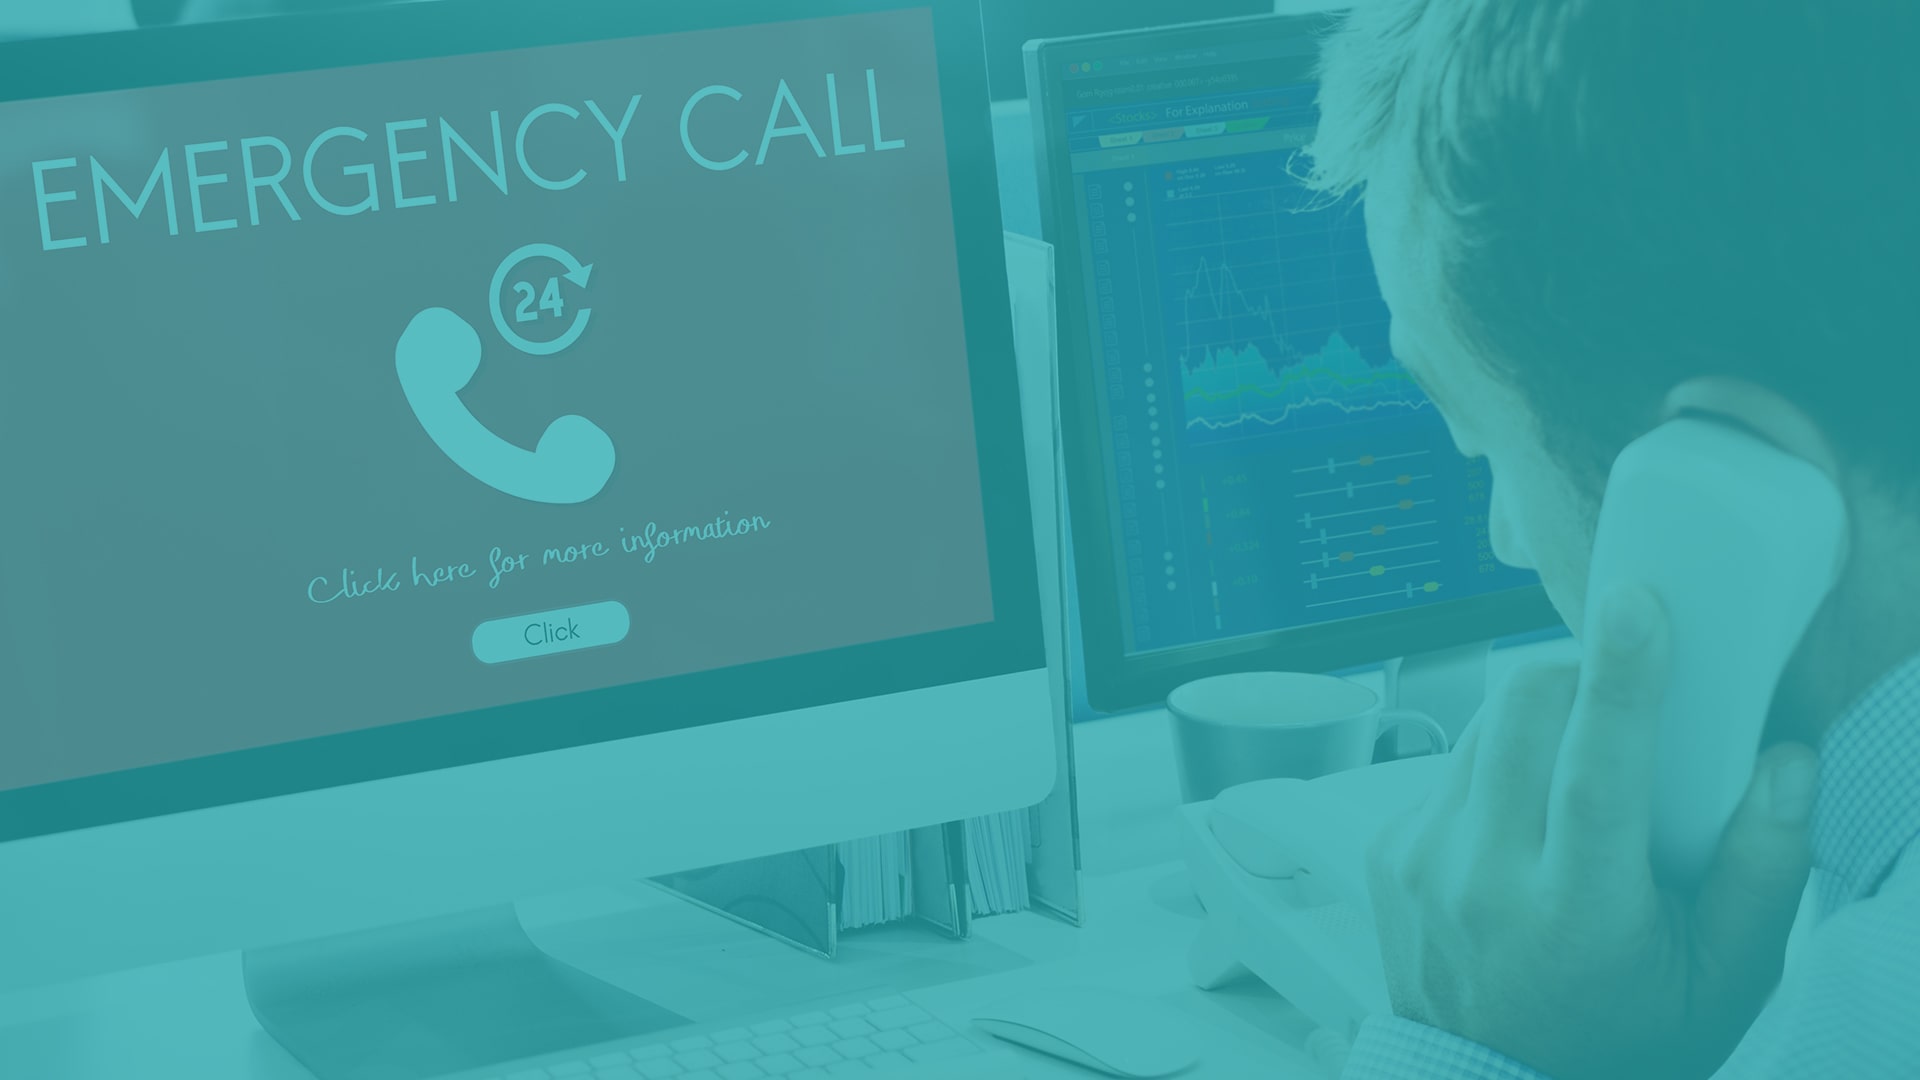 Trends in Emergency Communications Market